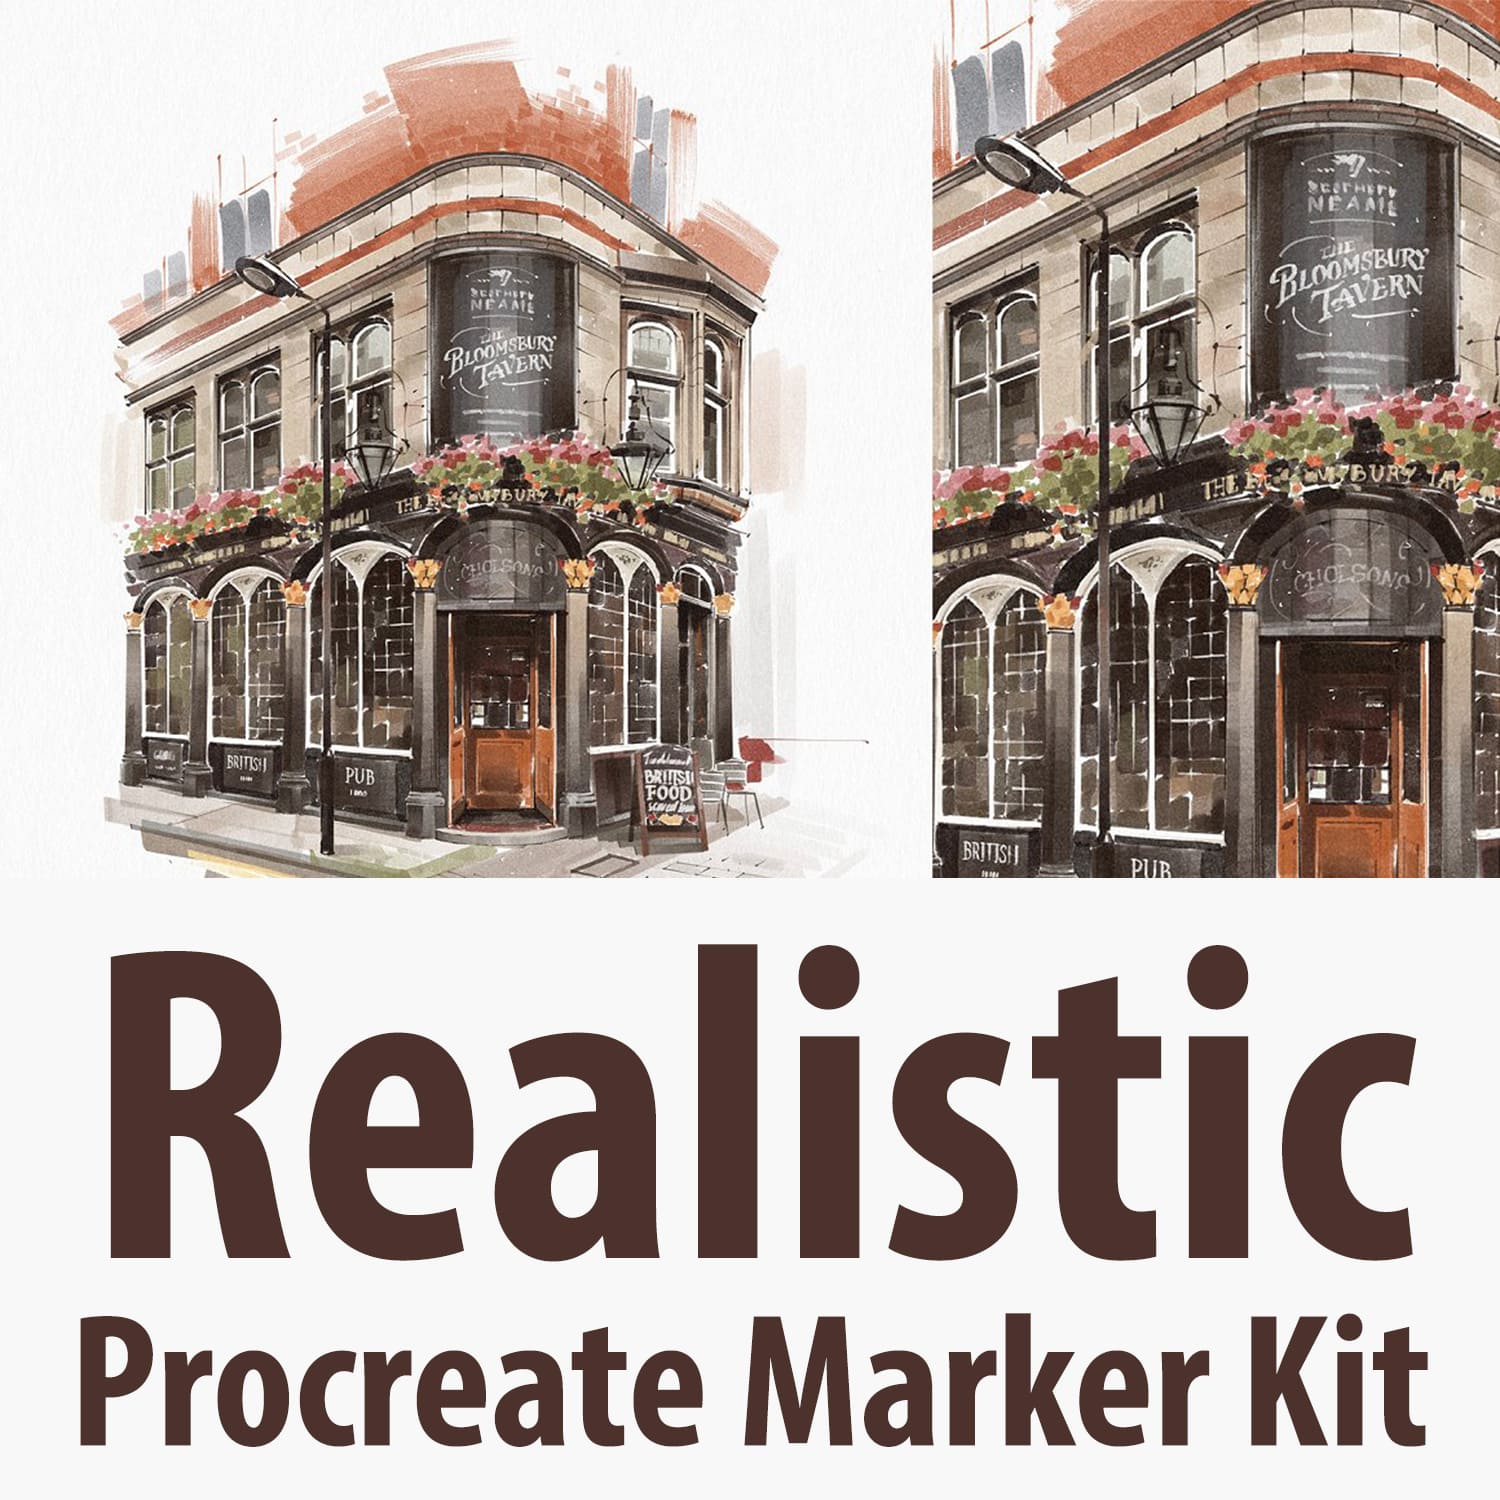 Realistic Procreate Marker Kit main cover.